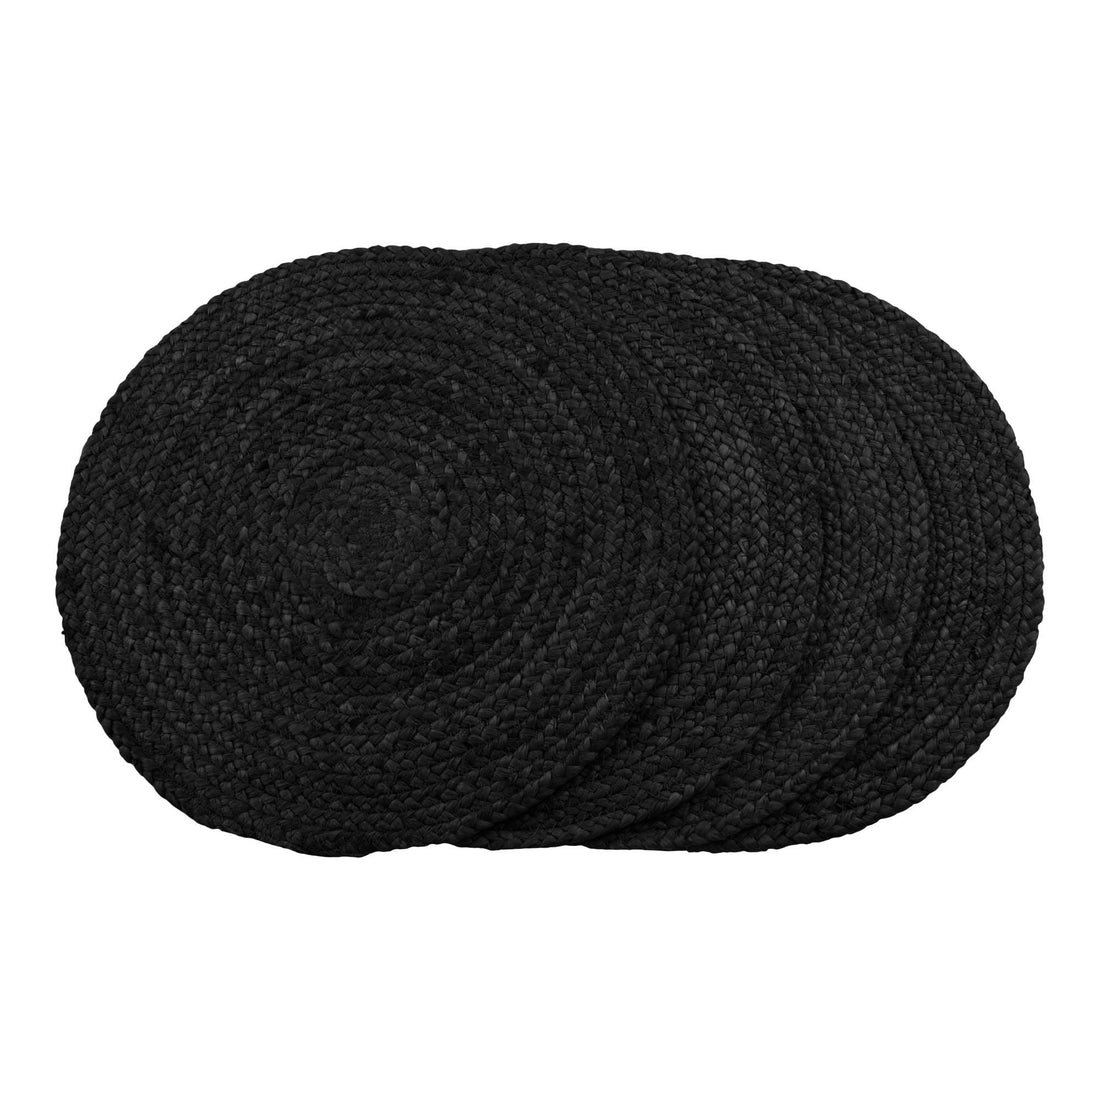 Bombay tire napkin, set of 4 - tire napkin in braided jute, dark gray, Ø38 cm, set of 4 - 1 - pcs